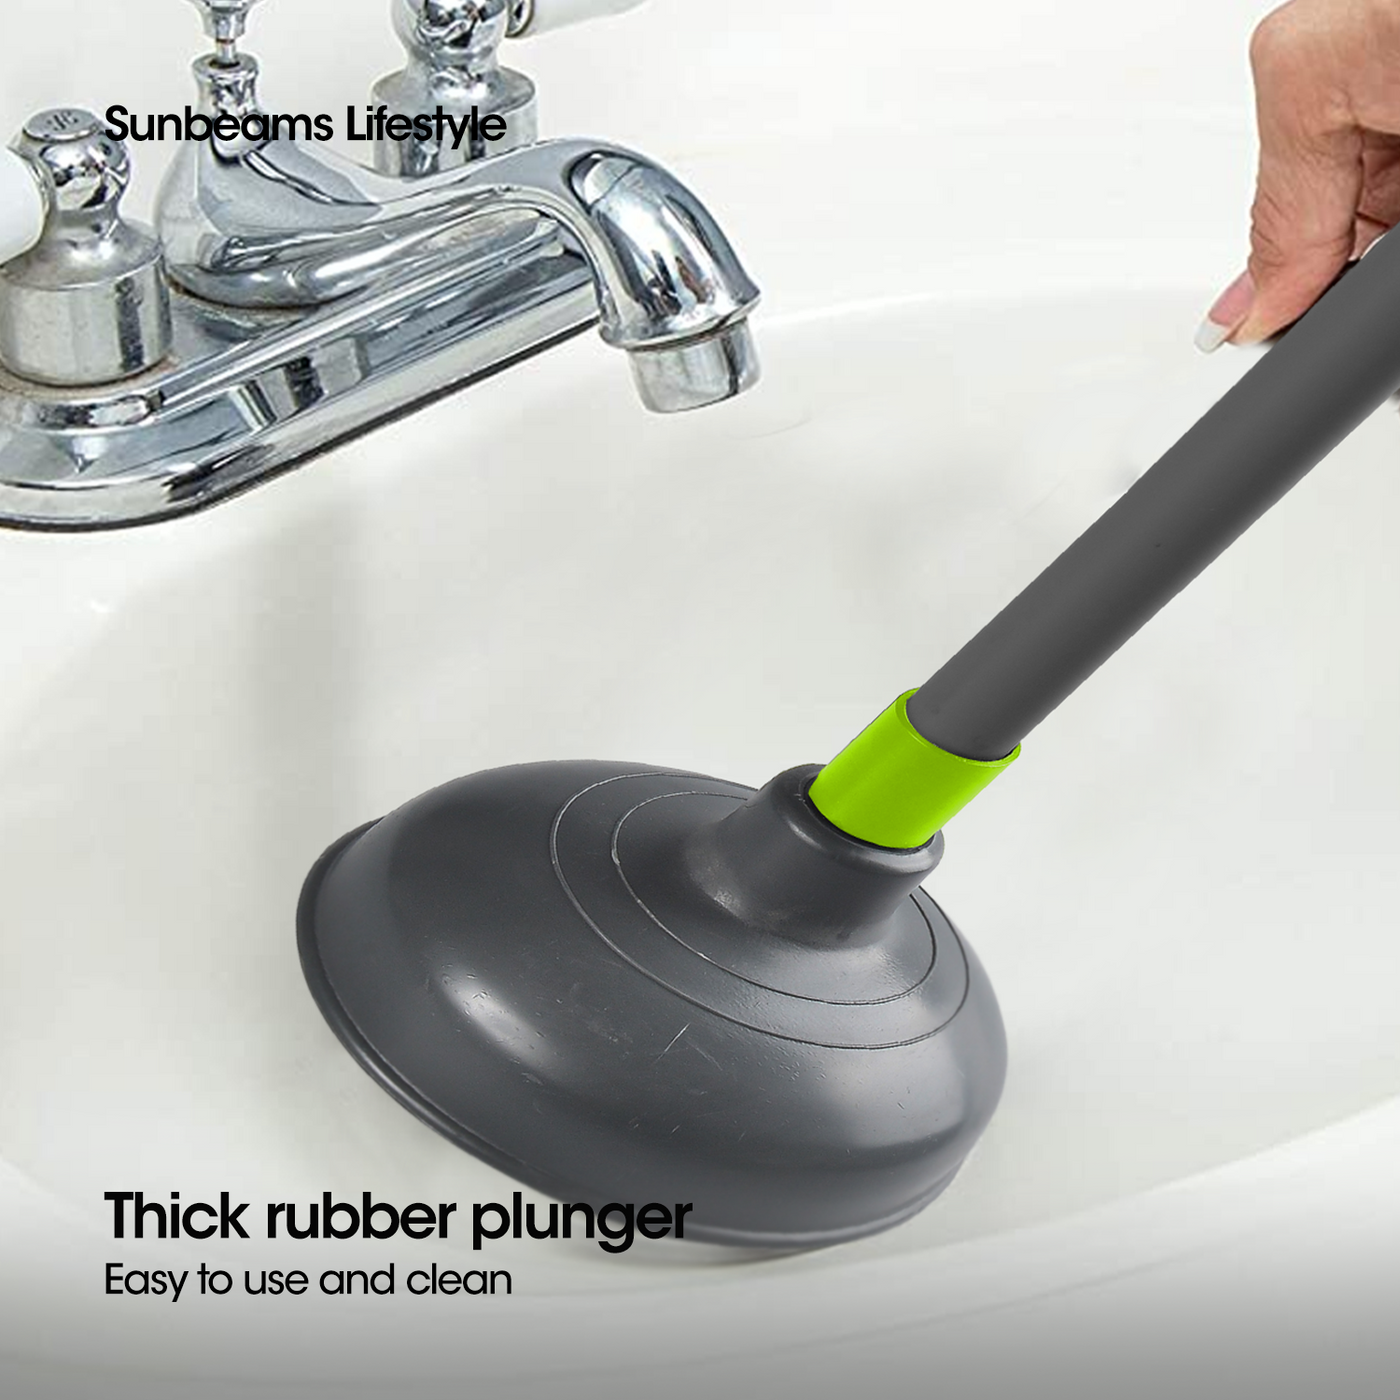 SCRUBZ Premium Sink Plunger Cleaning Tools